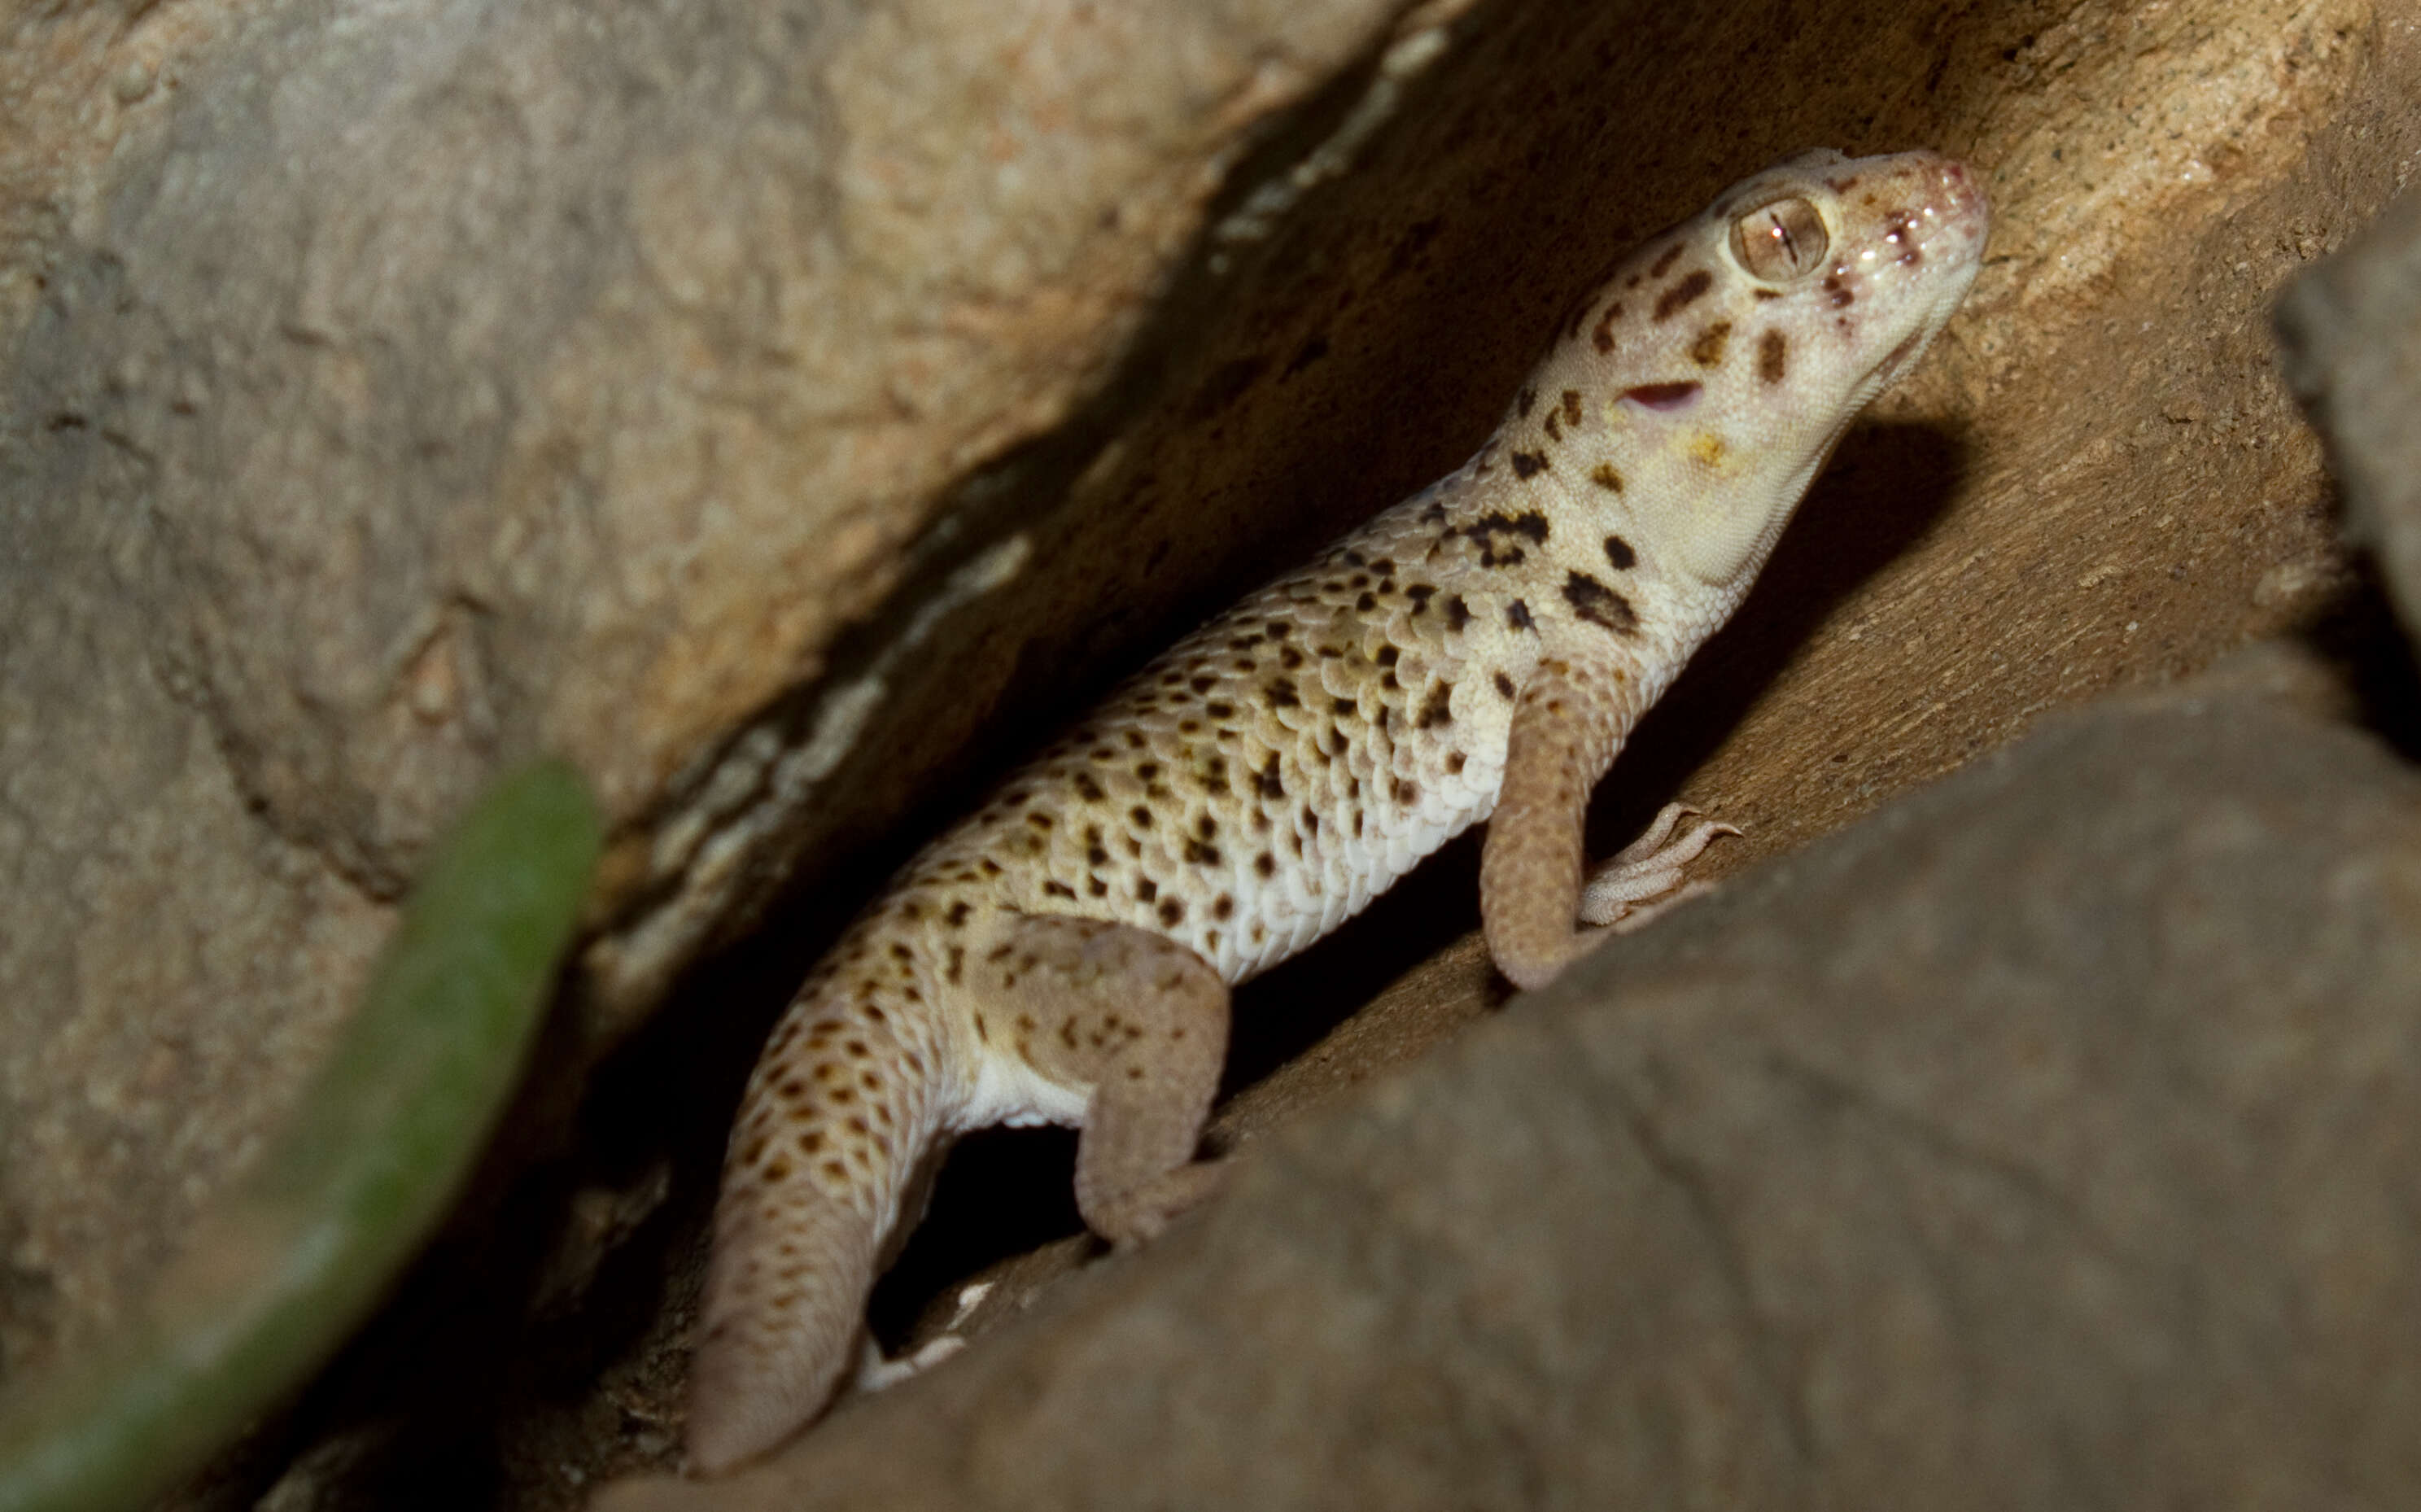 Image of Wonder geckos